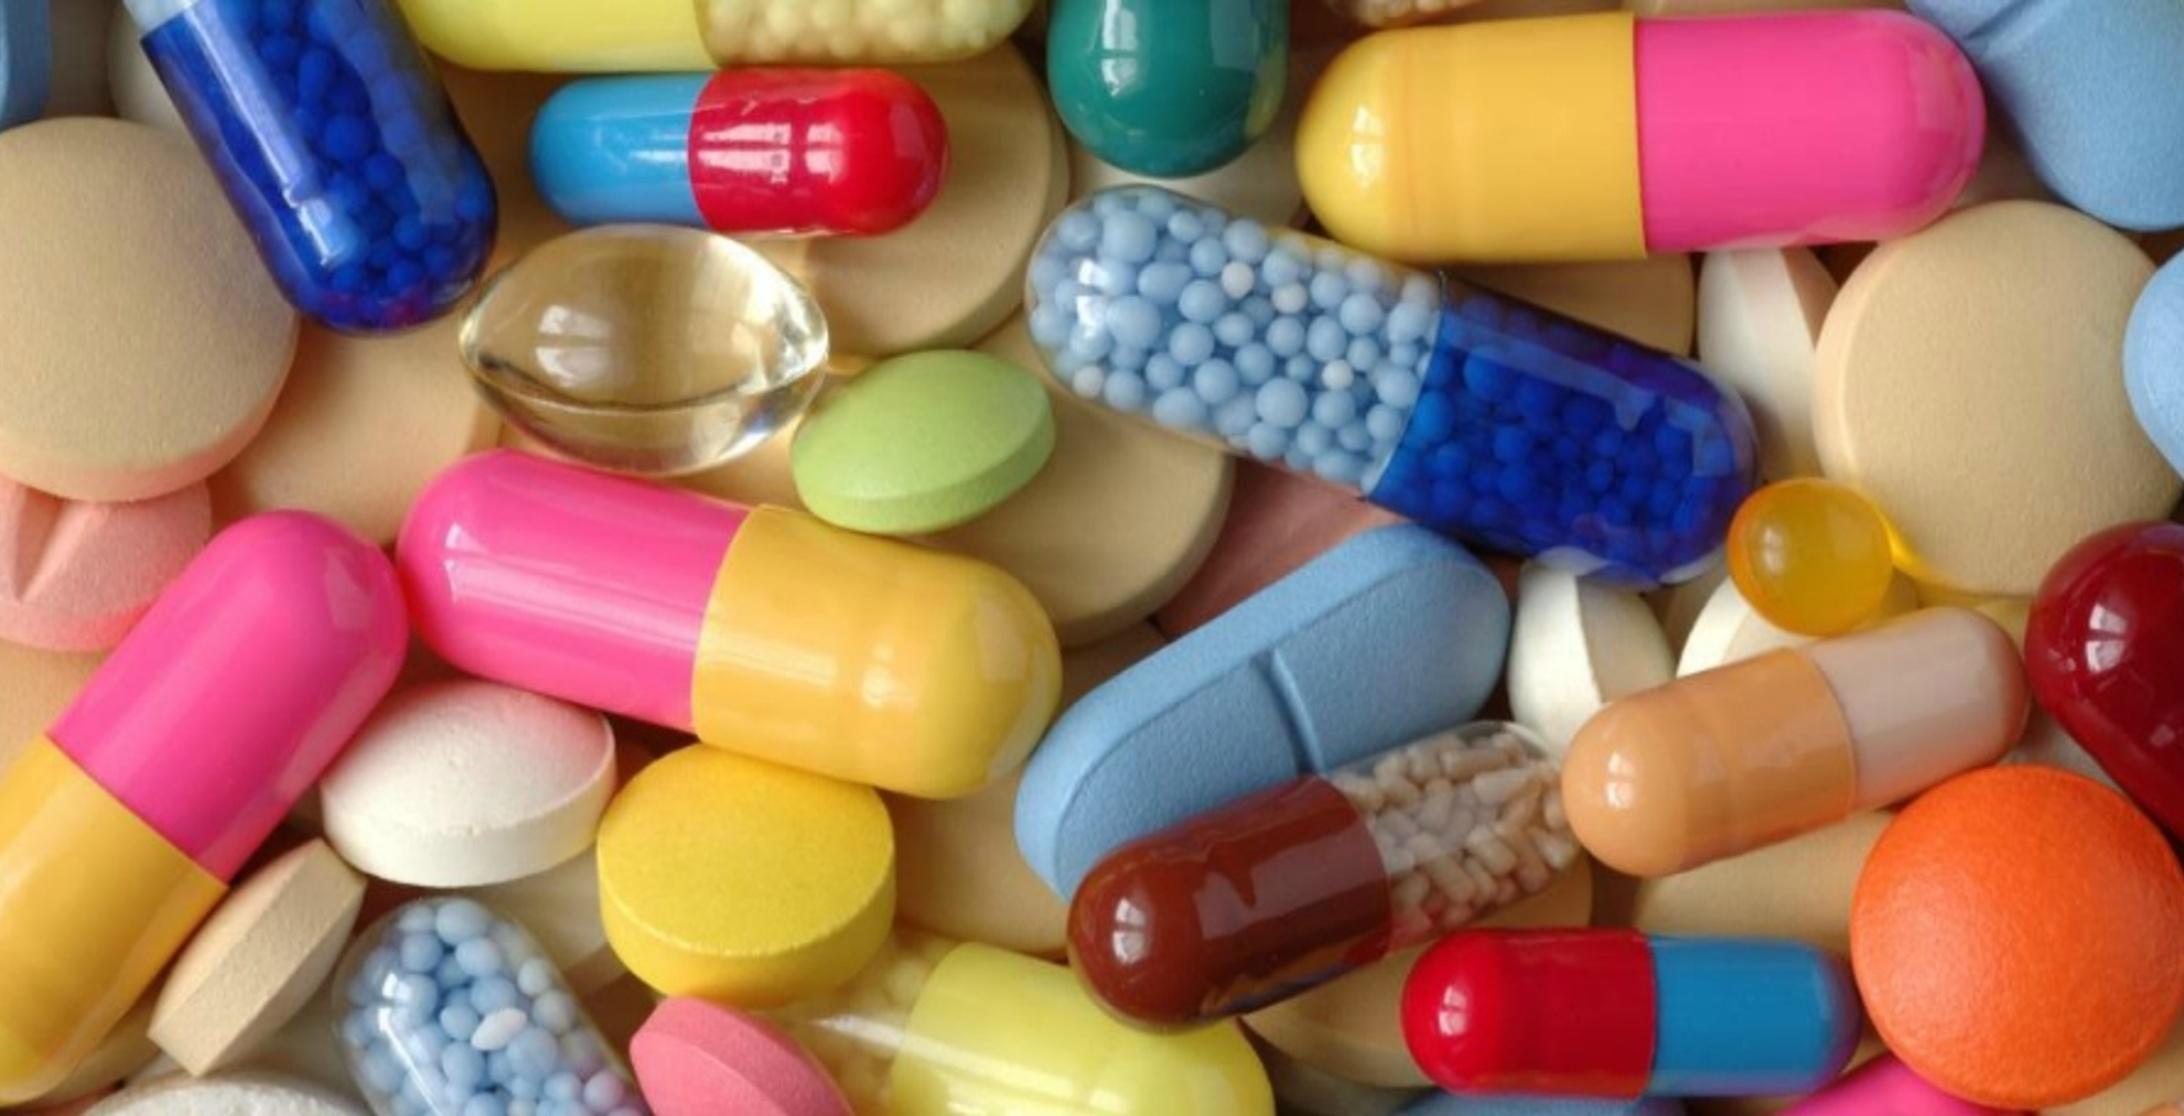 AcheDin For Medicine: Over 500 Essential Medicines Just Got Cheaper